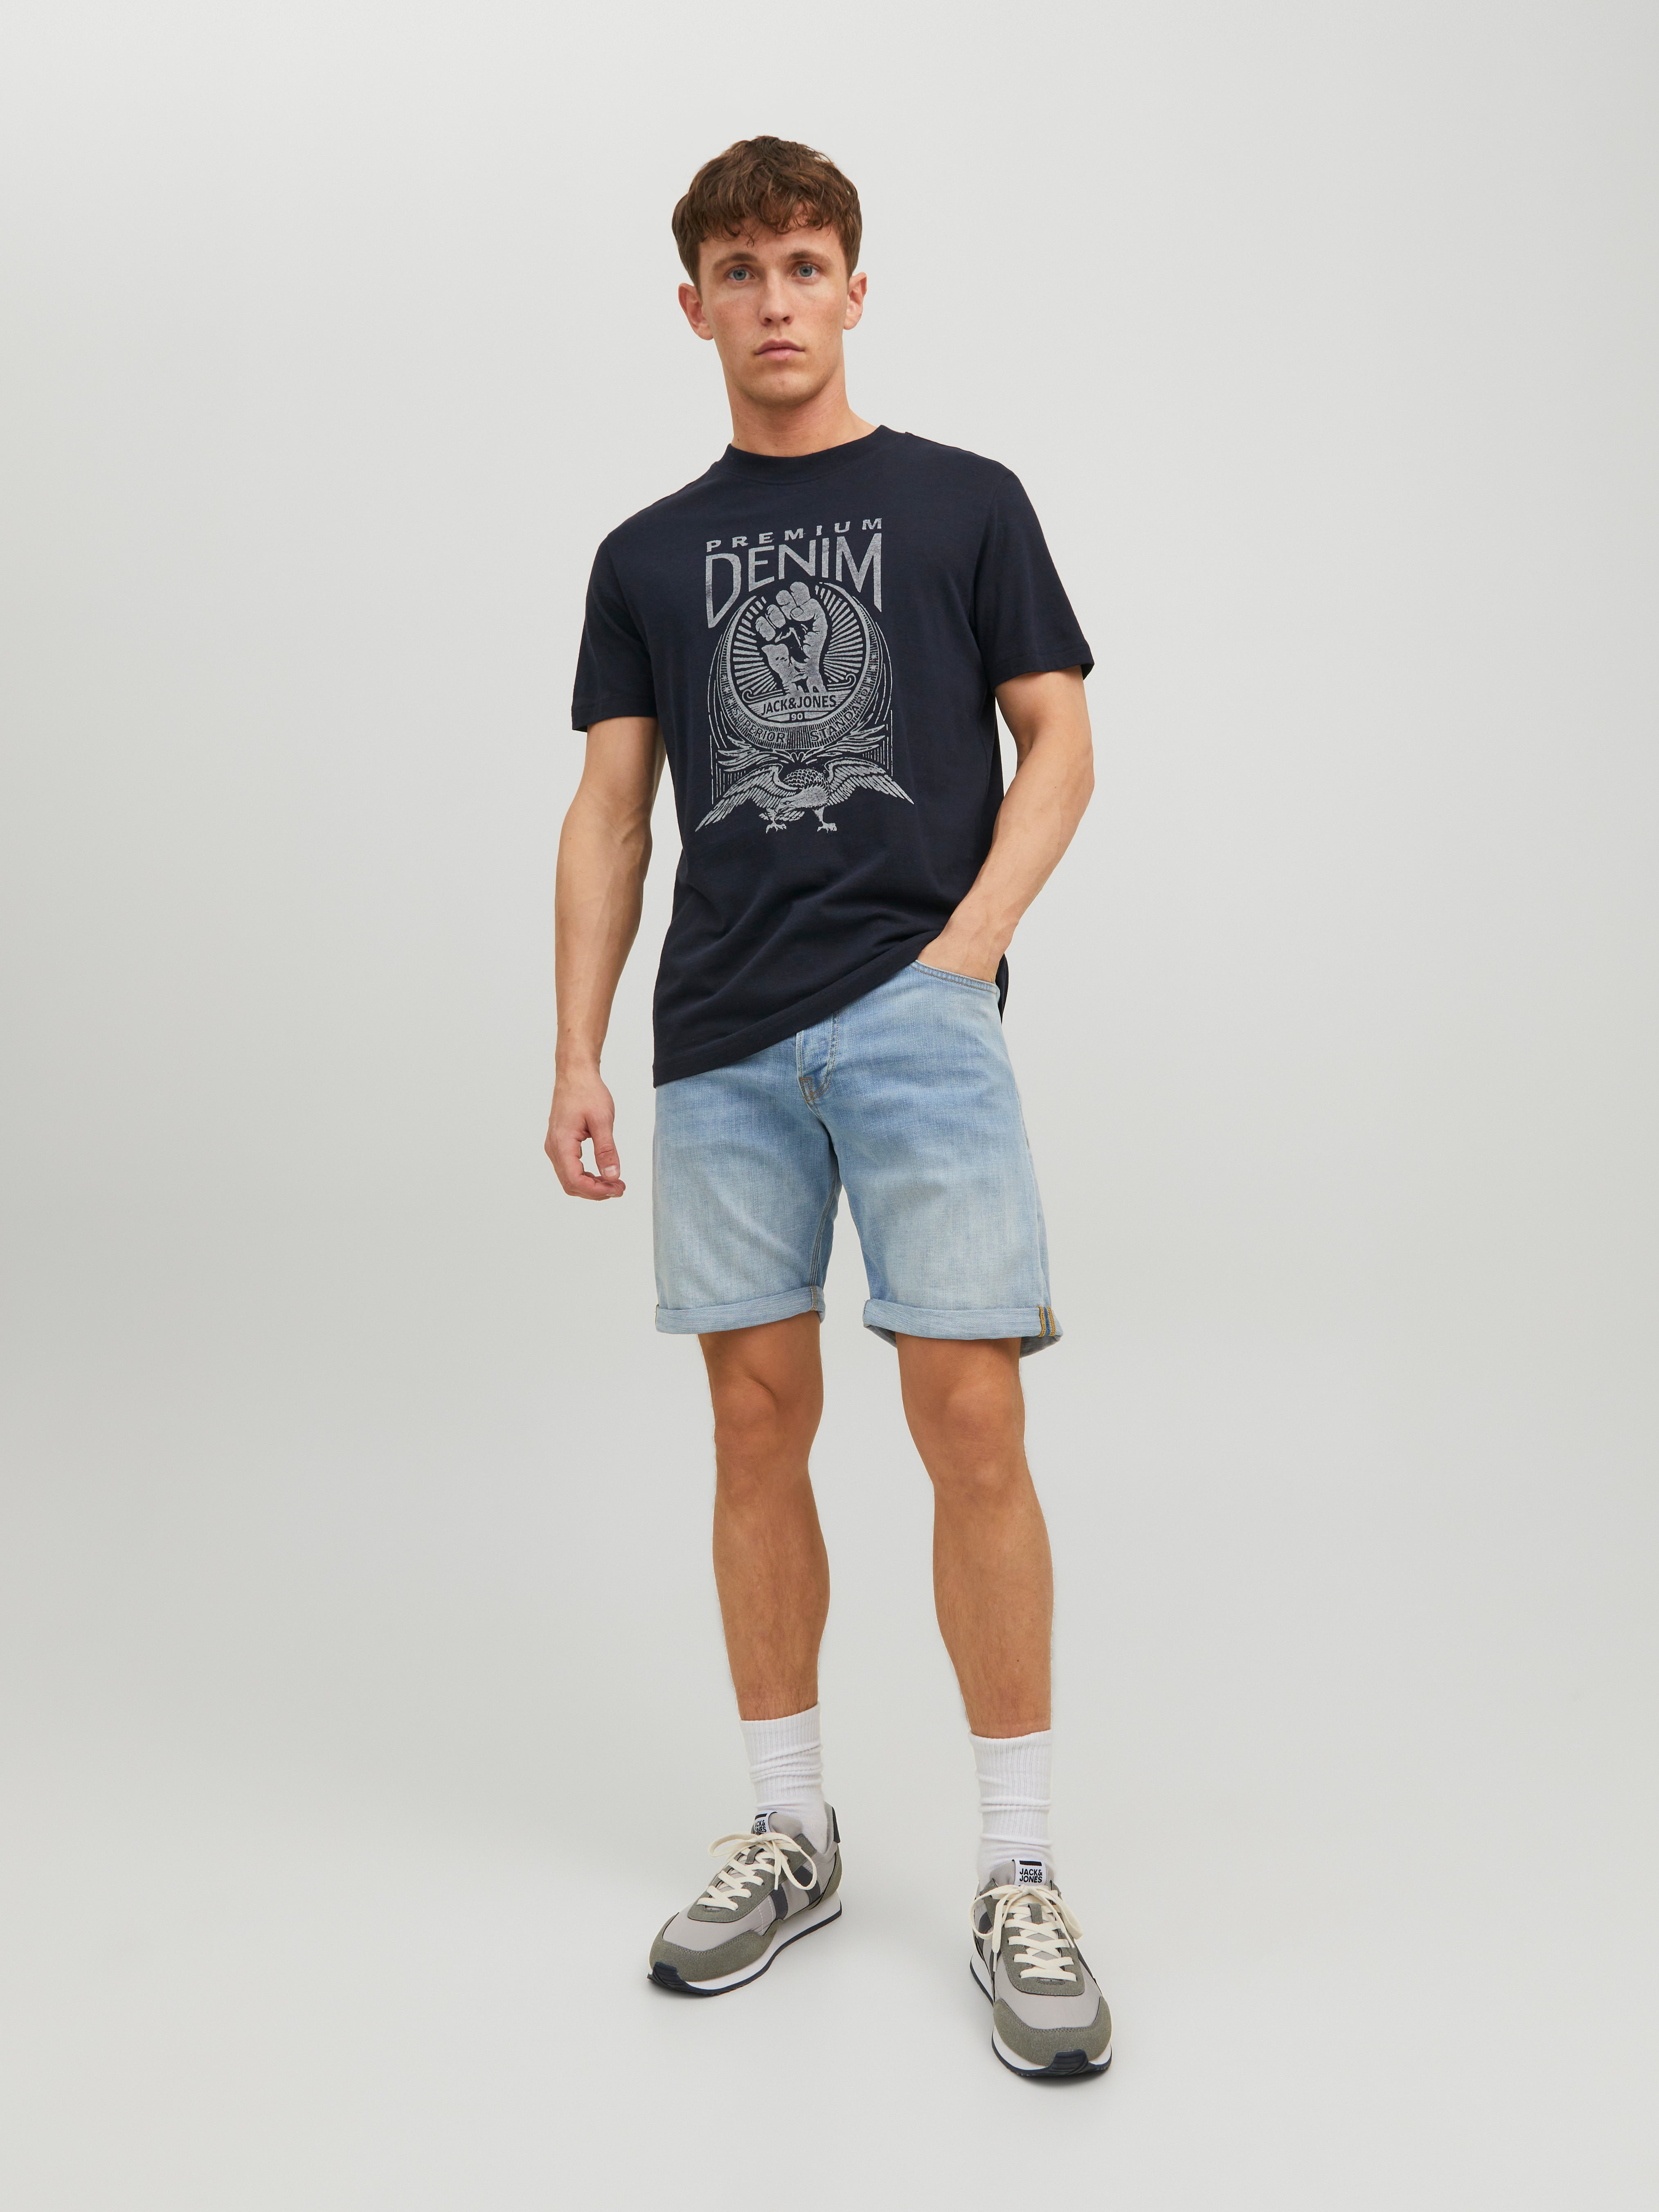 TIM FELIX AM 284 DENIM SHORTS, Blue Denim, large | Mens outfits, Denim  shorts, Mens jeans